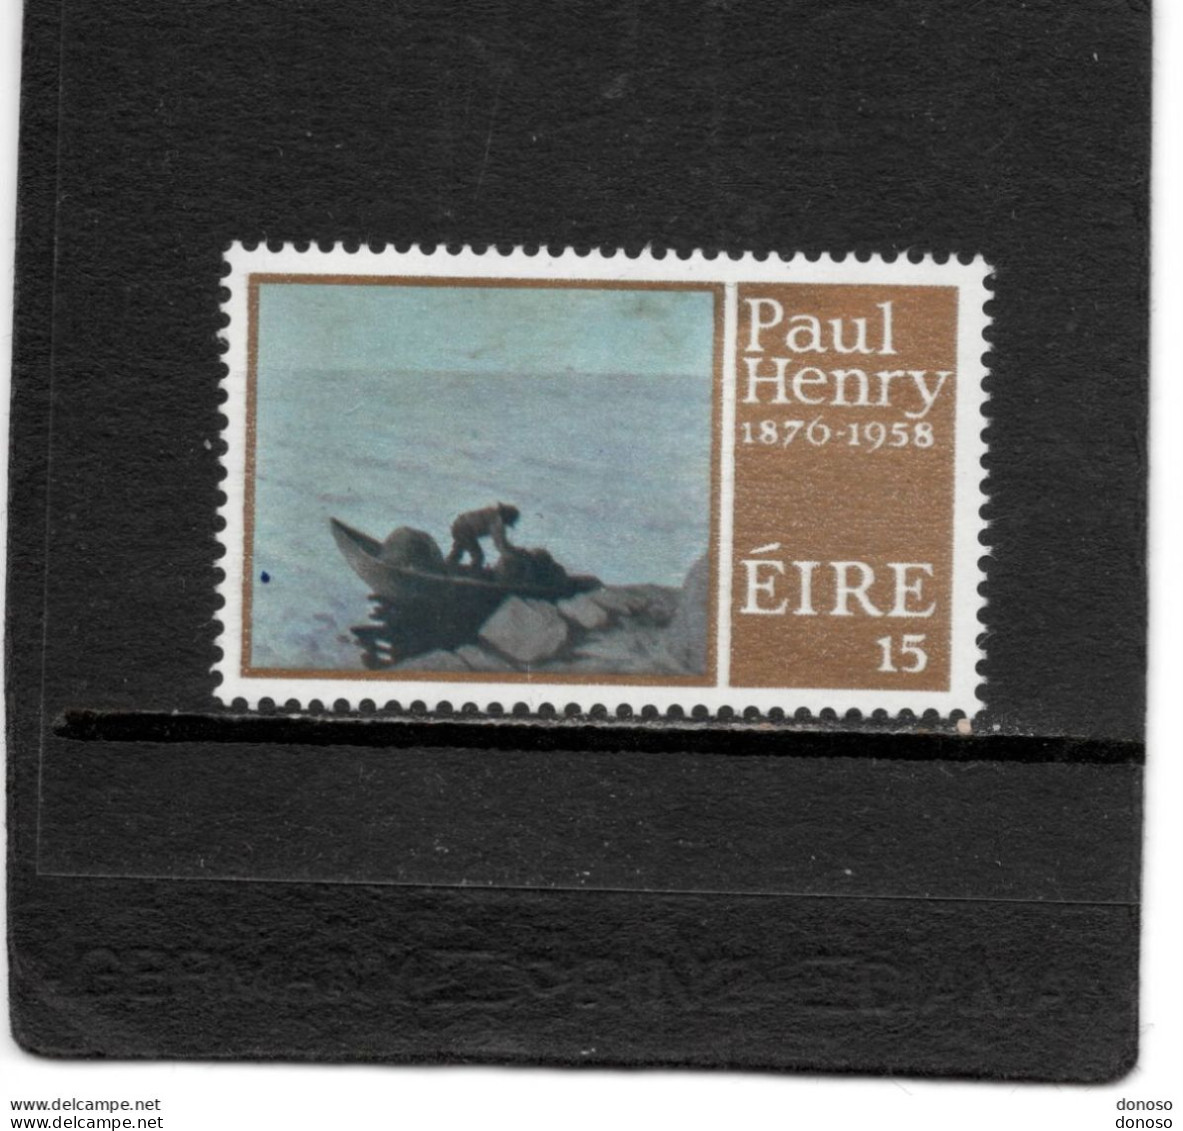 IRLANDE 1976  Art Contemporain, Peinture De Paul Henry Yvert 352 NEUF** MNH - Unused Stamps